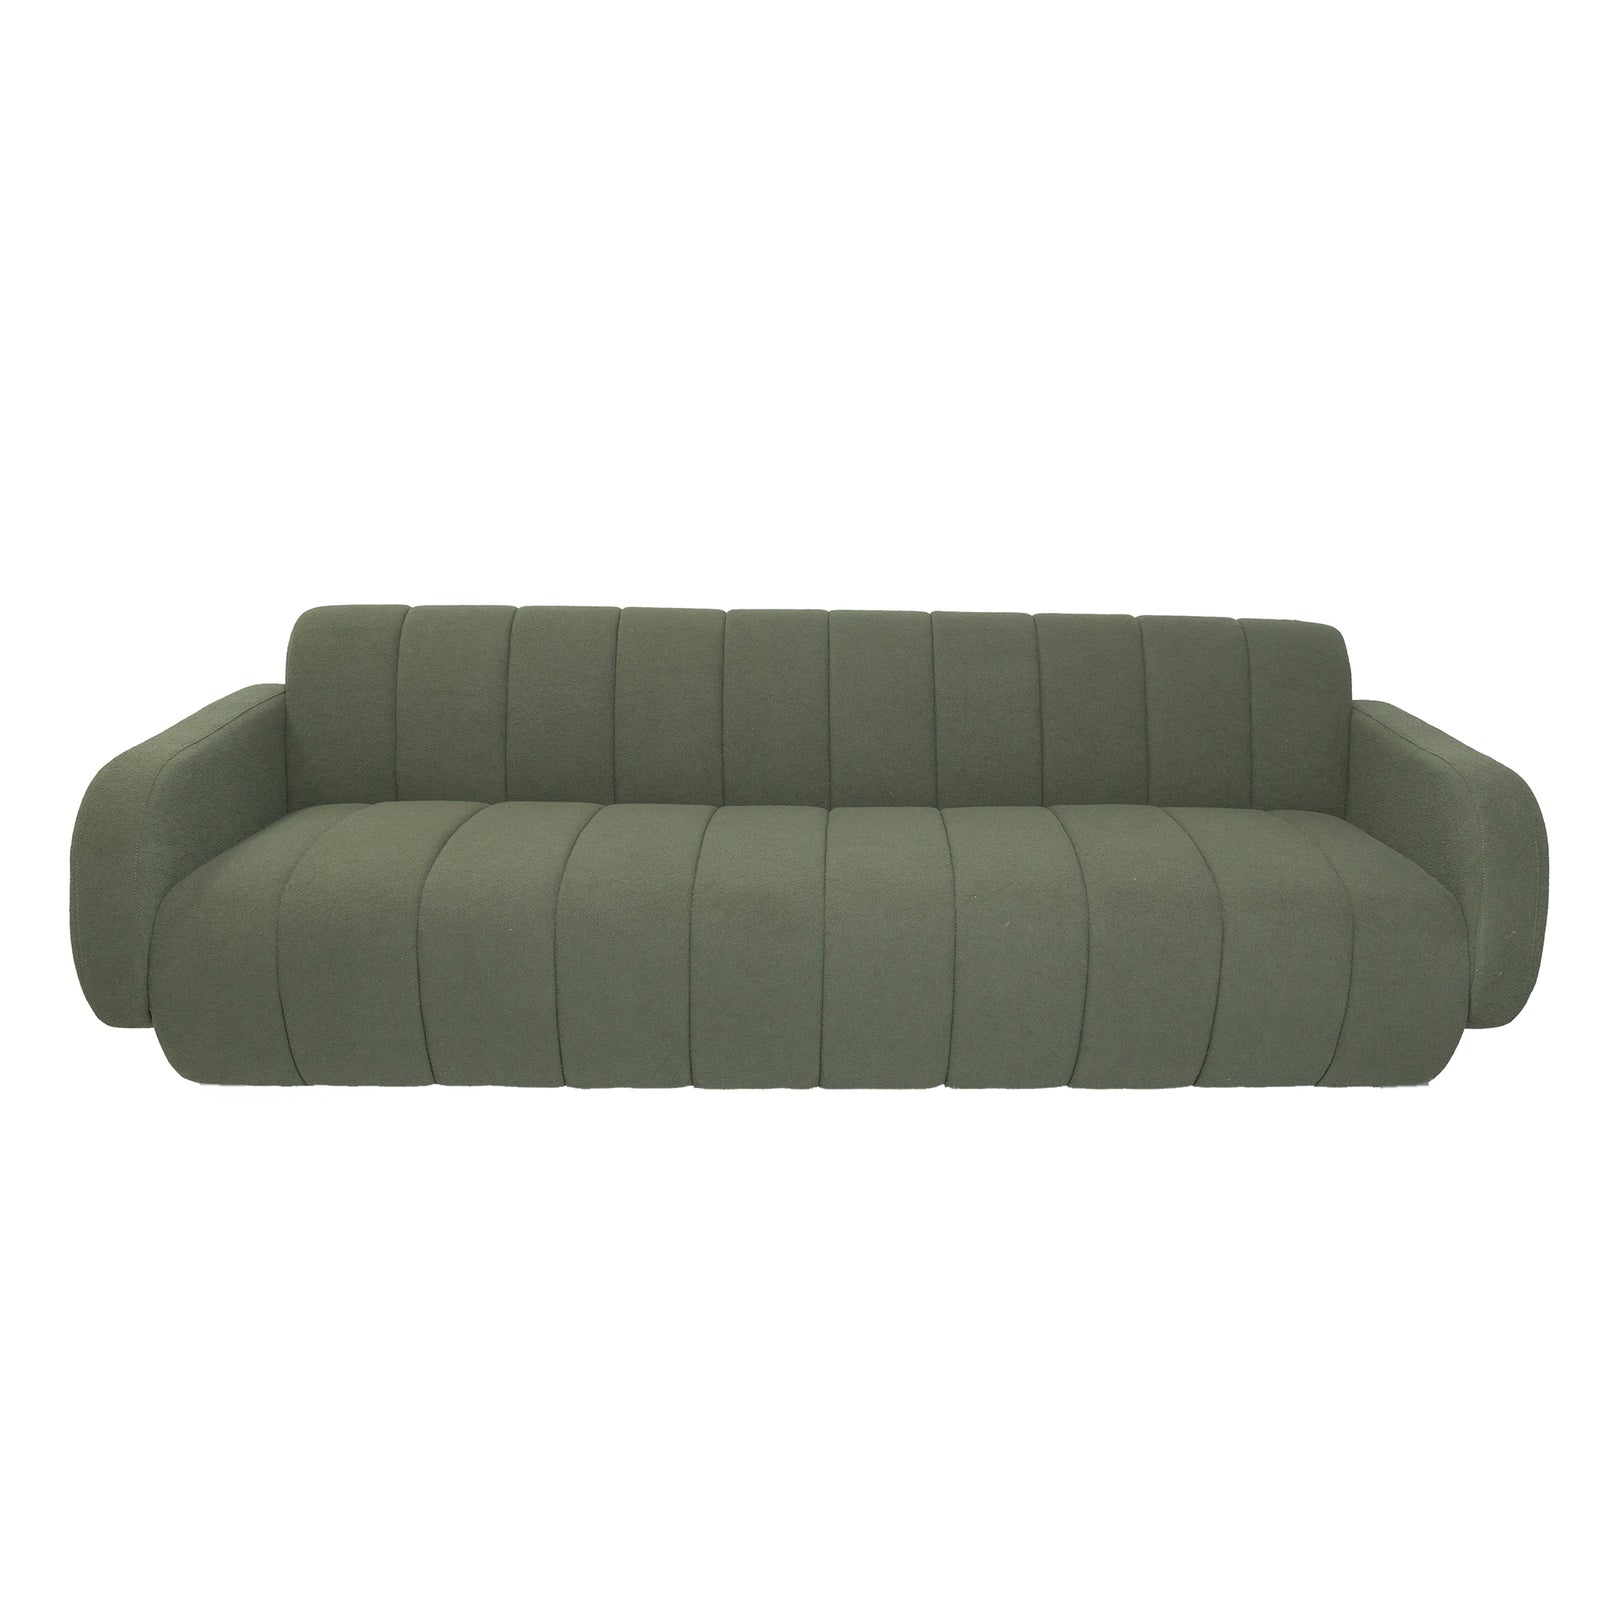 Channel Tufted Retro Sofa Dark Green Boucle 3 Seater